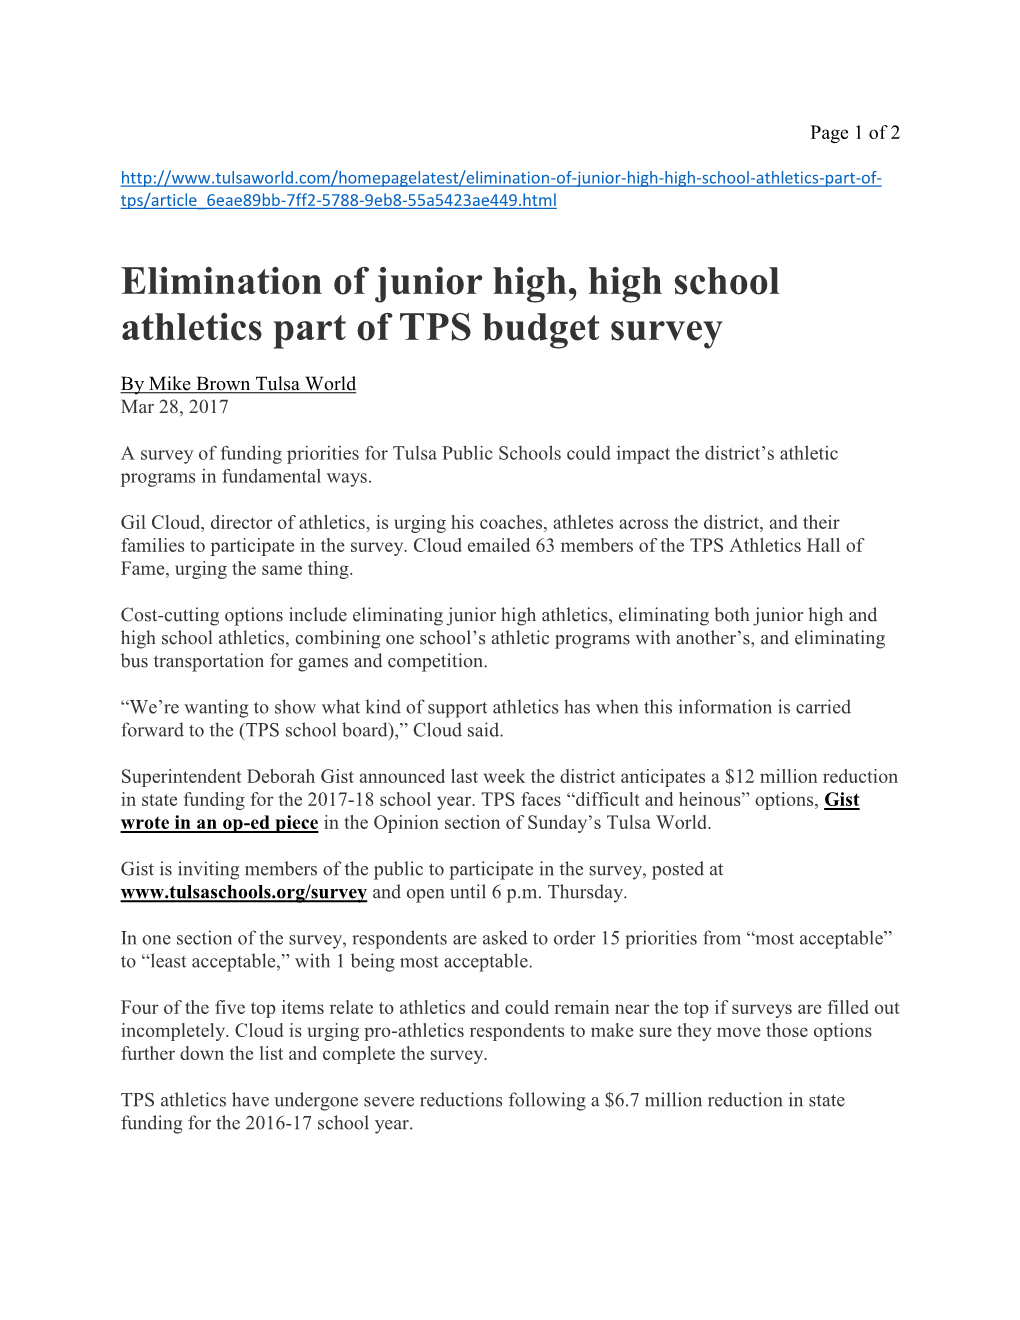 Elimination of Junior High, High School Athletics Part of TPS Budget Survey